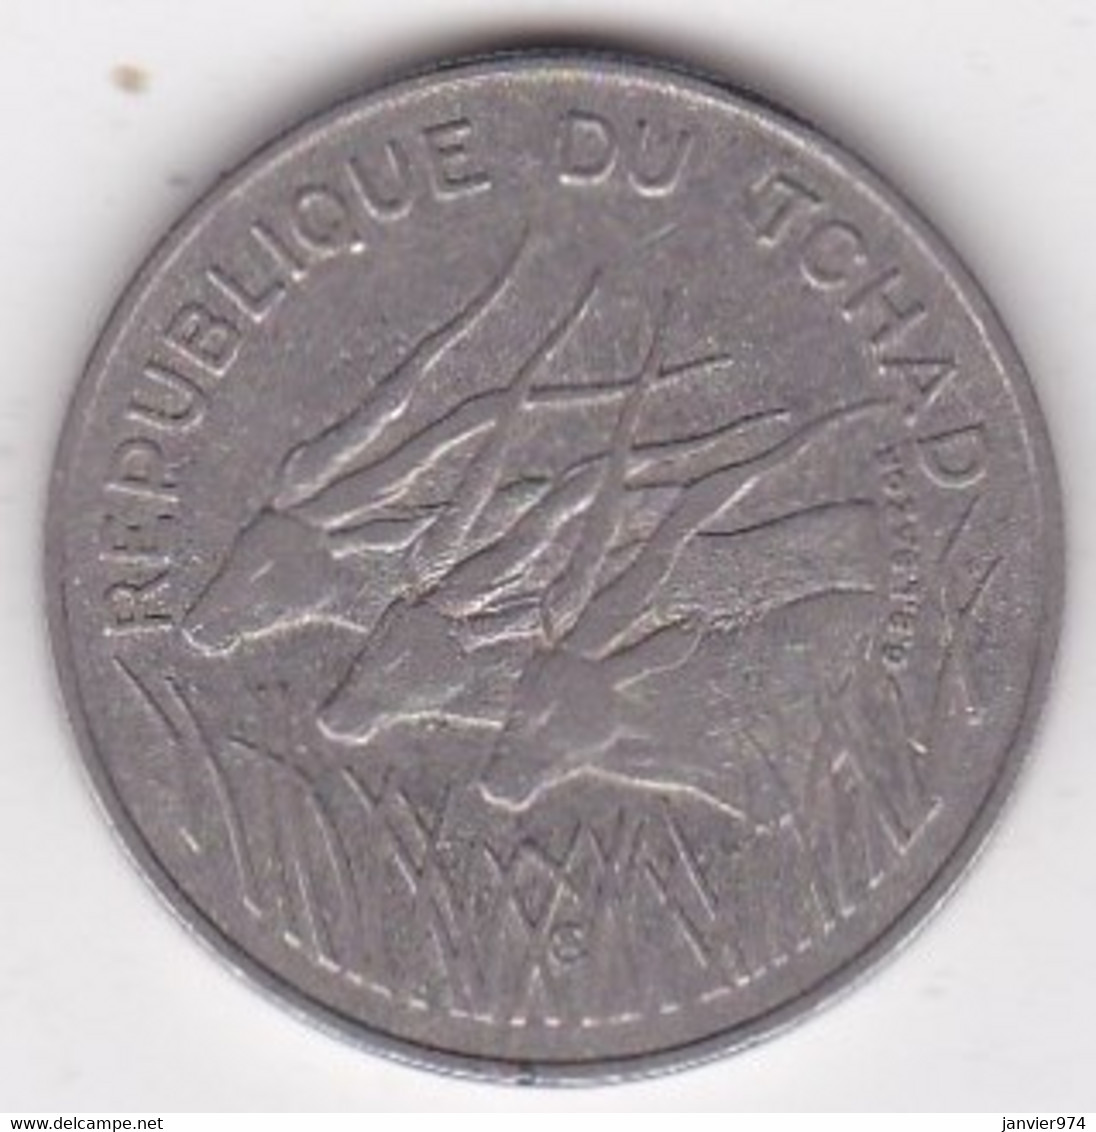 République Du Tchad 100 Francs 1990, Cupro Nickel , KM# 3 - Tschad